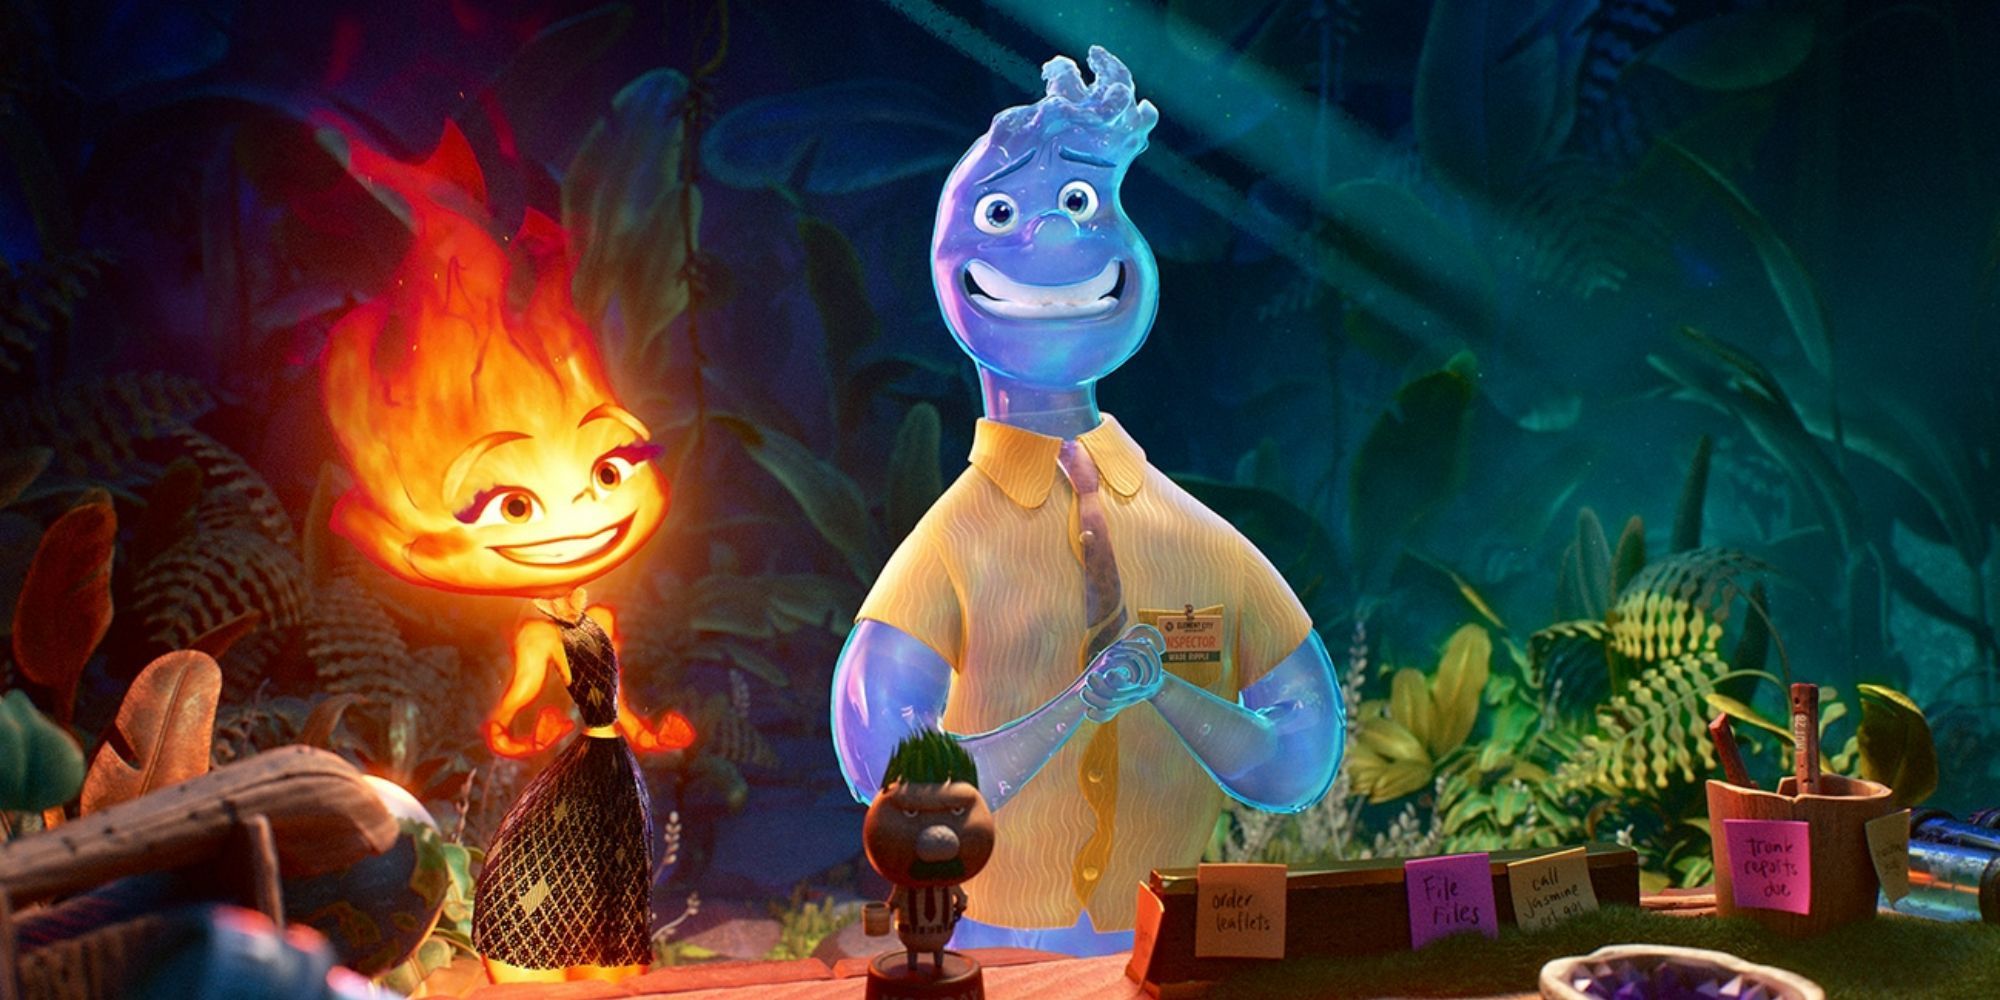 Ember and Wade smiling nervously in Pixar's Elemental